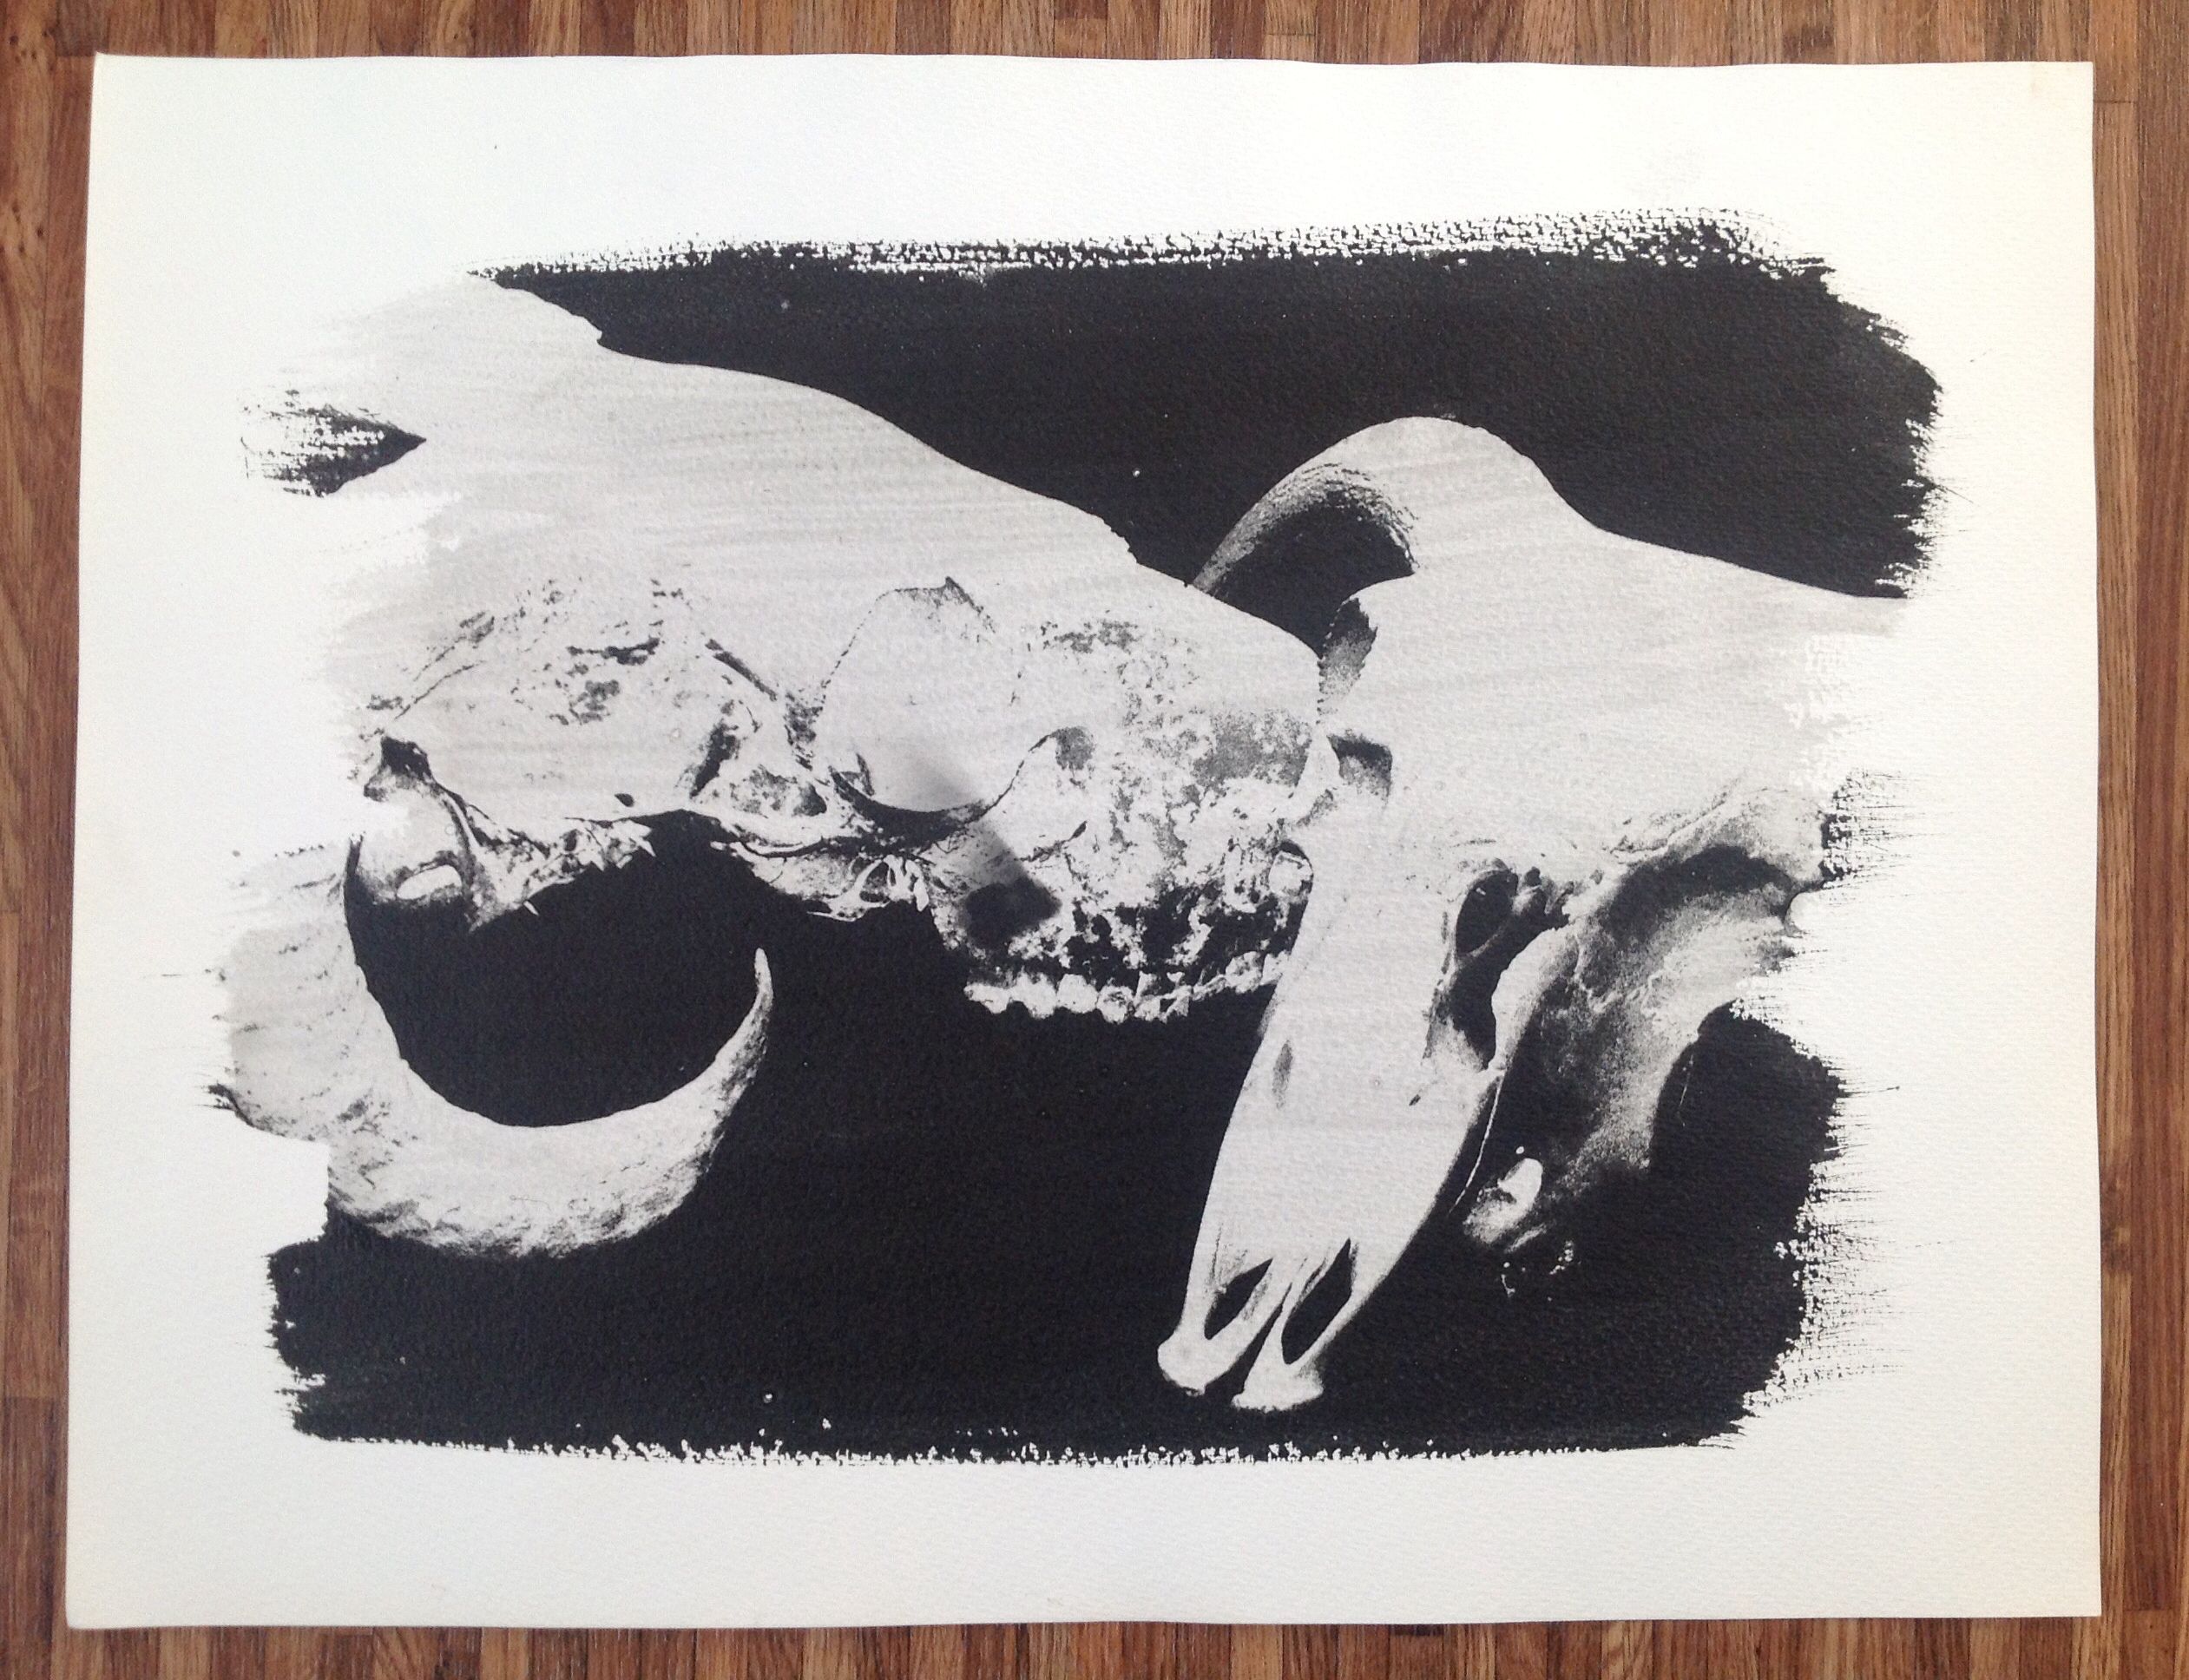 Acetate negative print of skulls onto watercolour paper using liquid ...